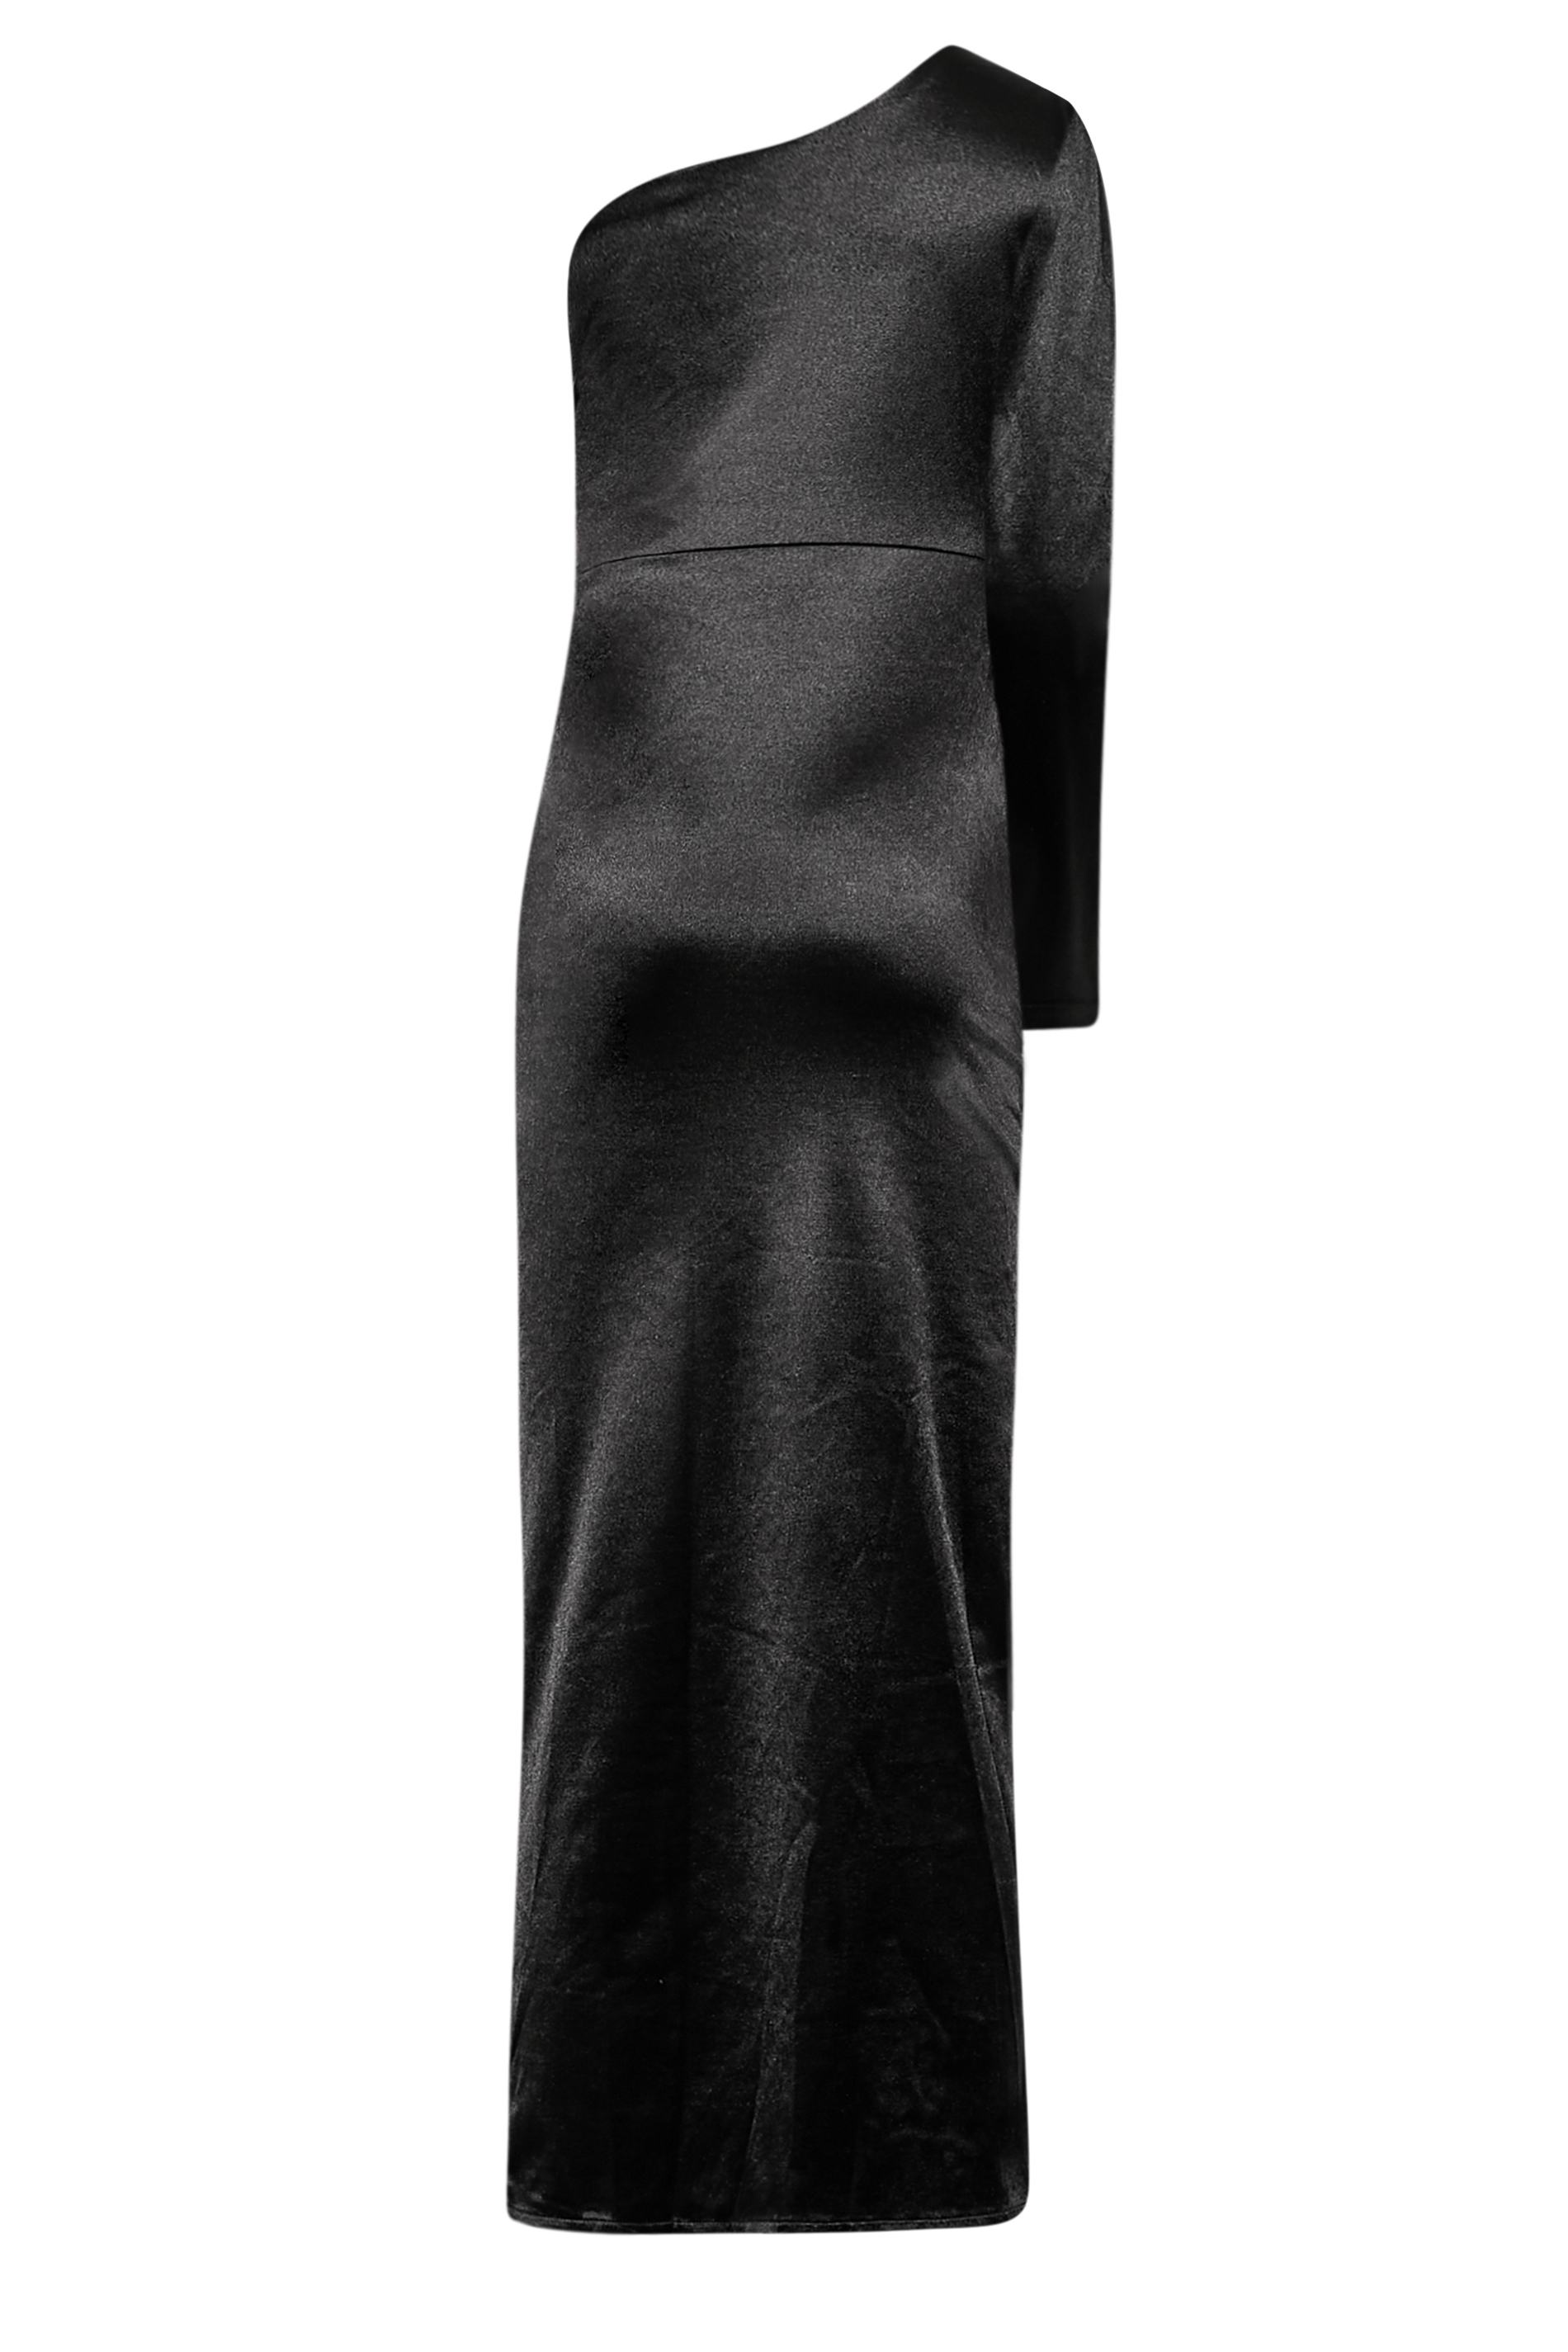 LTS Tall Black One Shoulder Satin Maxi Dress | Long Tall Sally  3